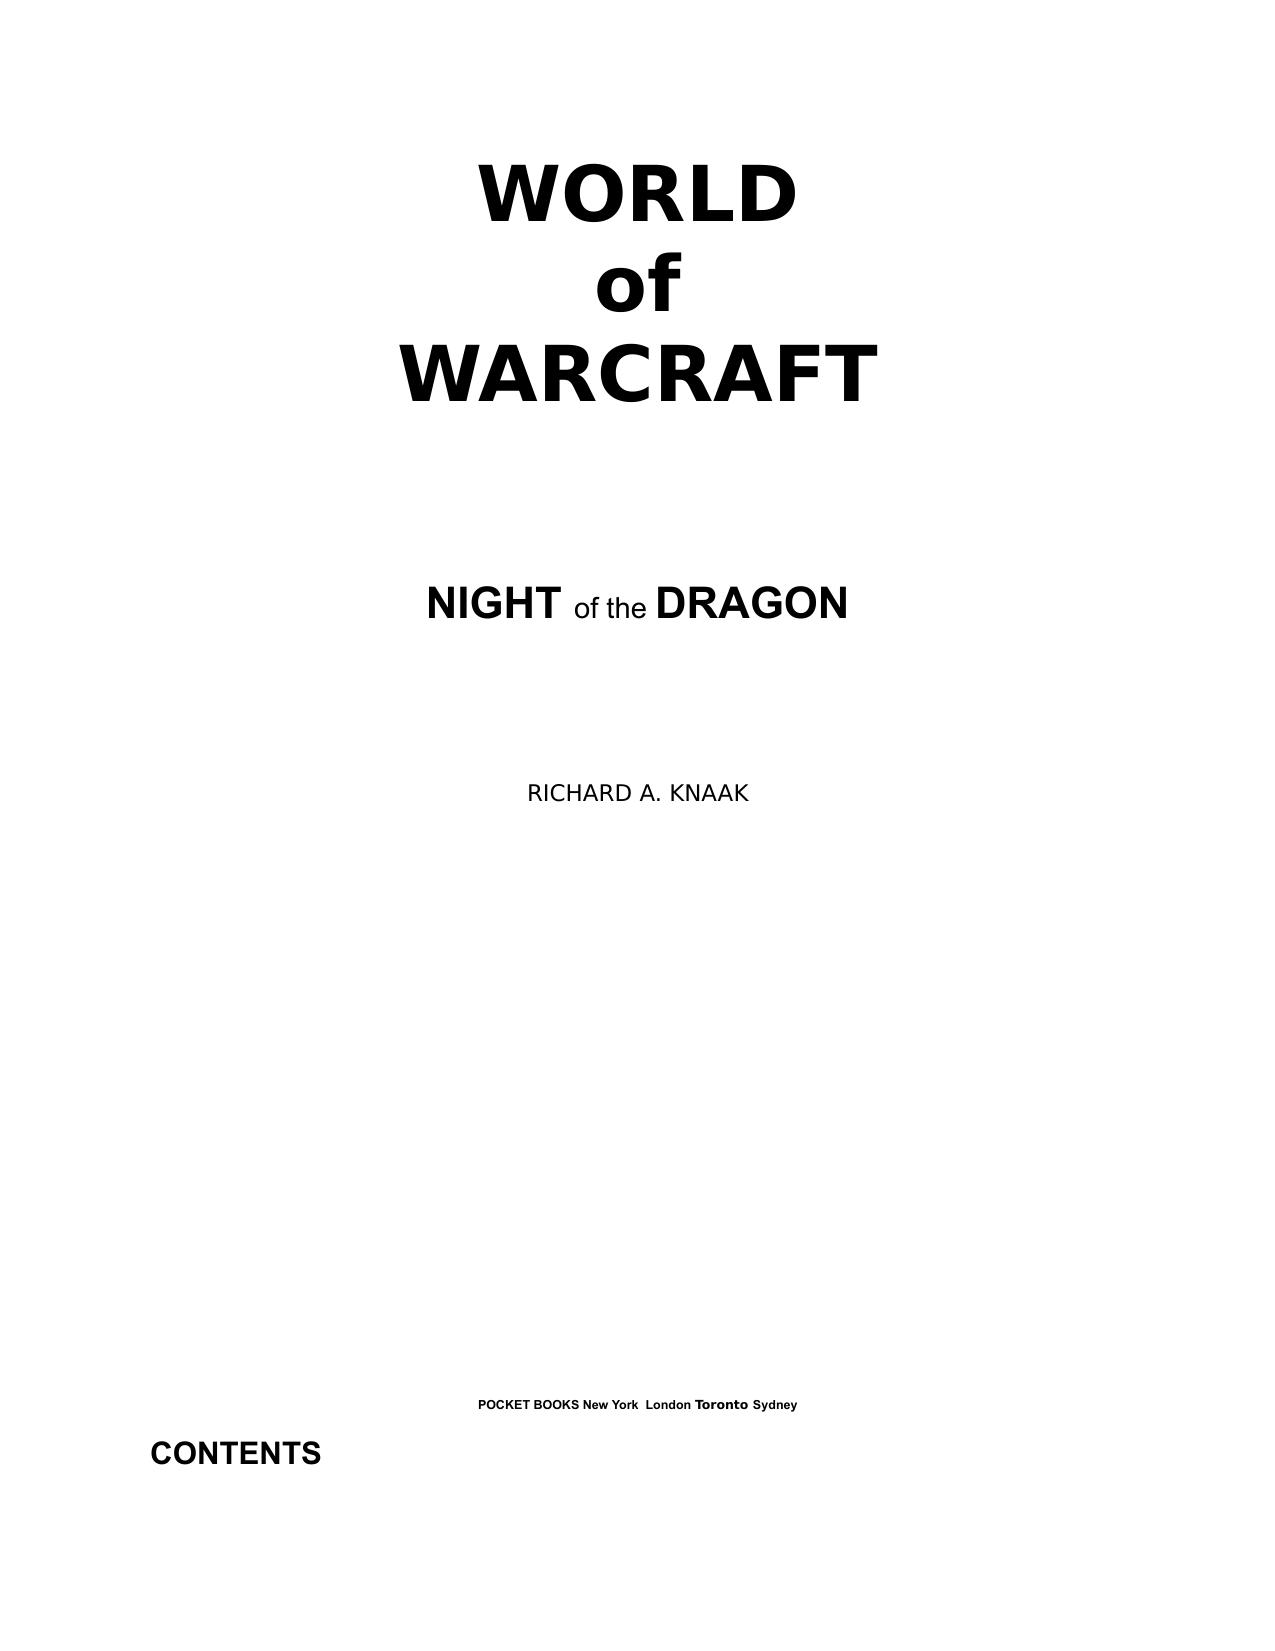 World of Warcraft: Night of the Dragon by Richard A. Knaak